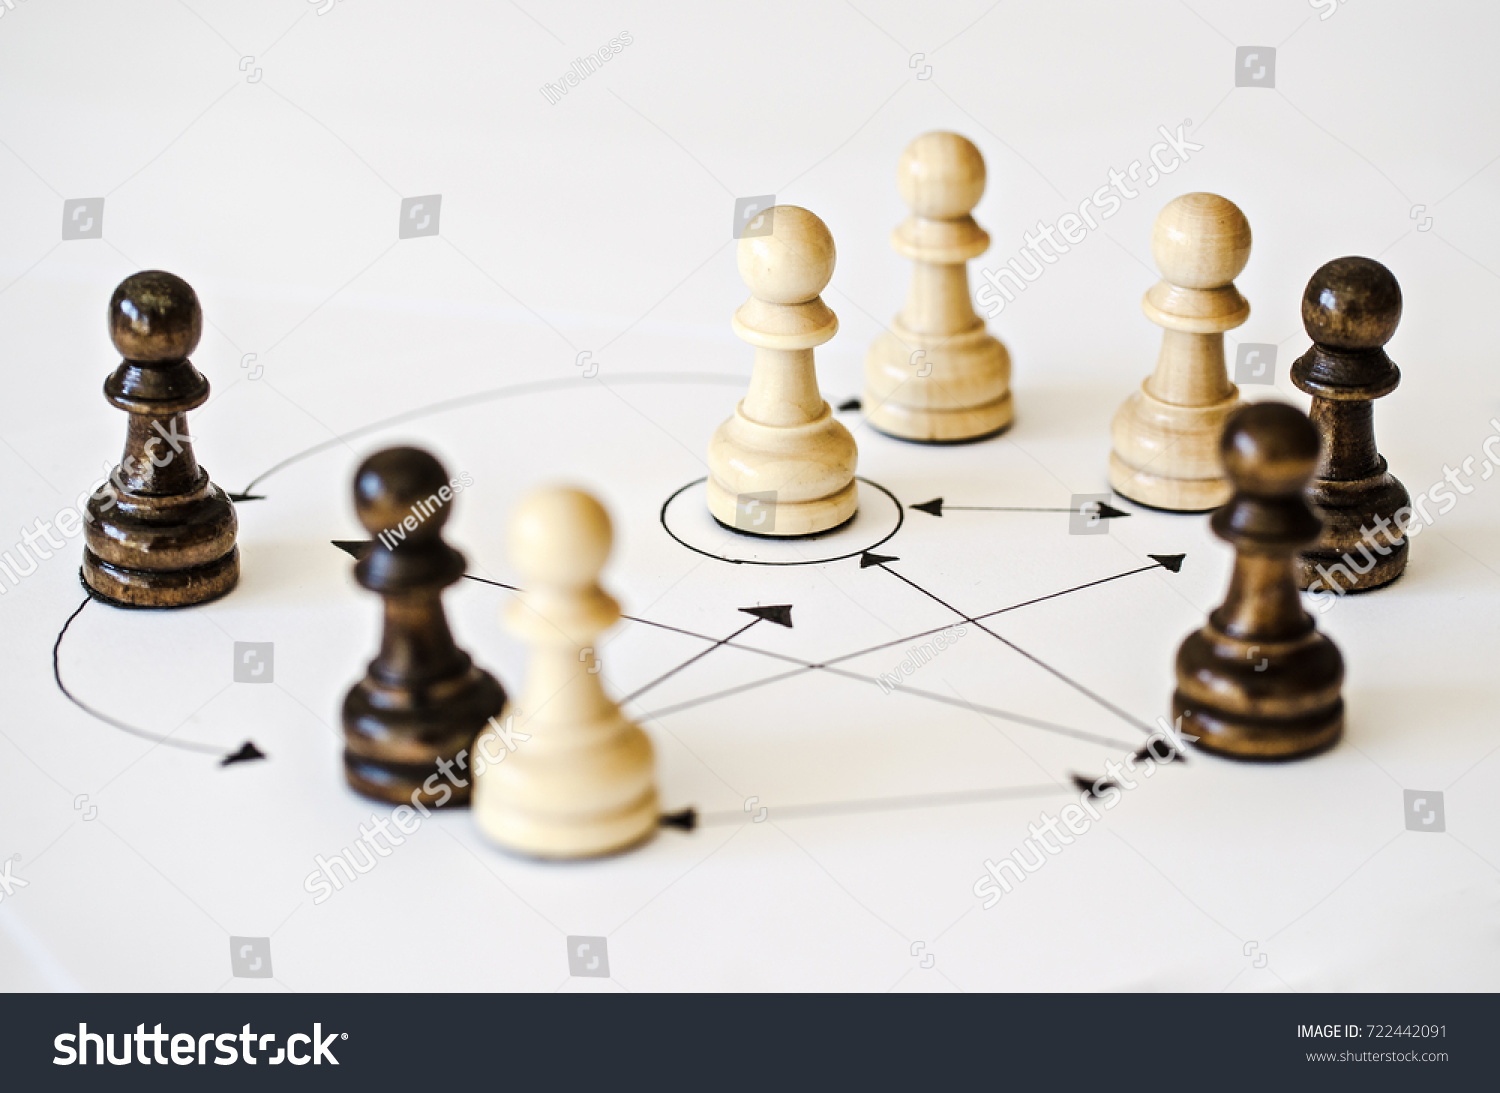 chessmen - figures depicting relations between people, social behavior - group dynamics #722442091